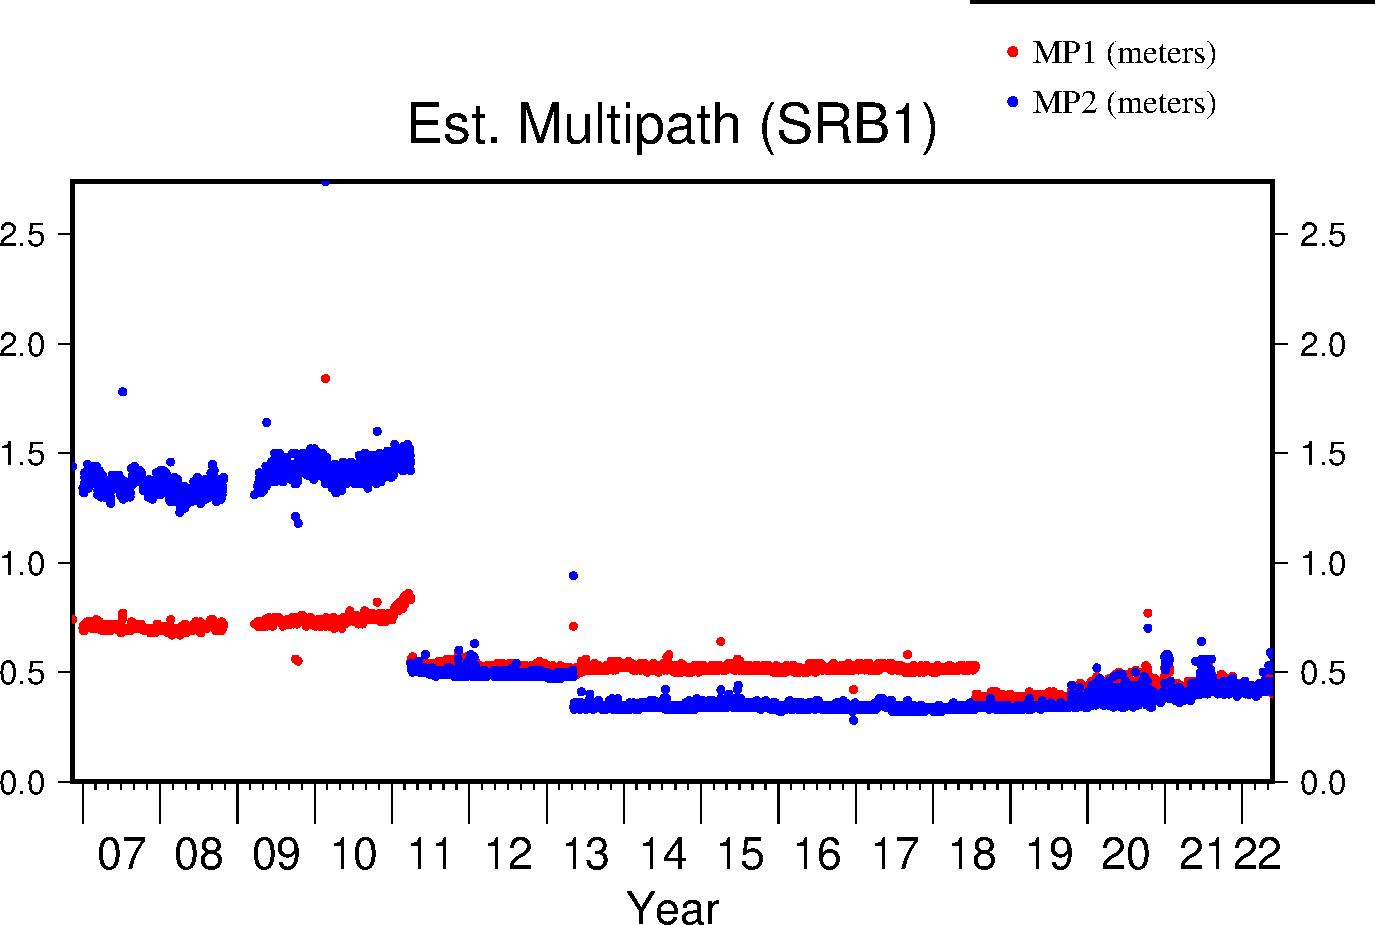 SRB1 multipath lifetime